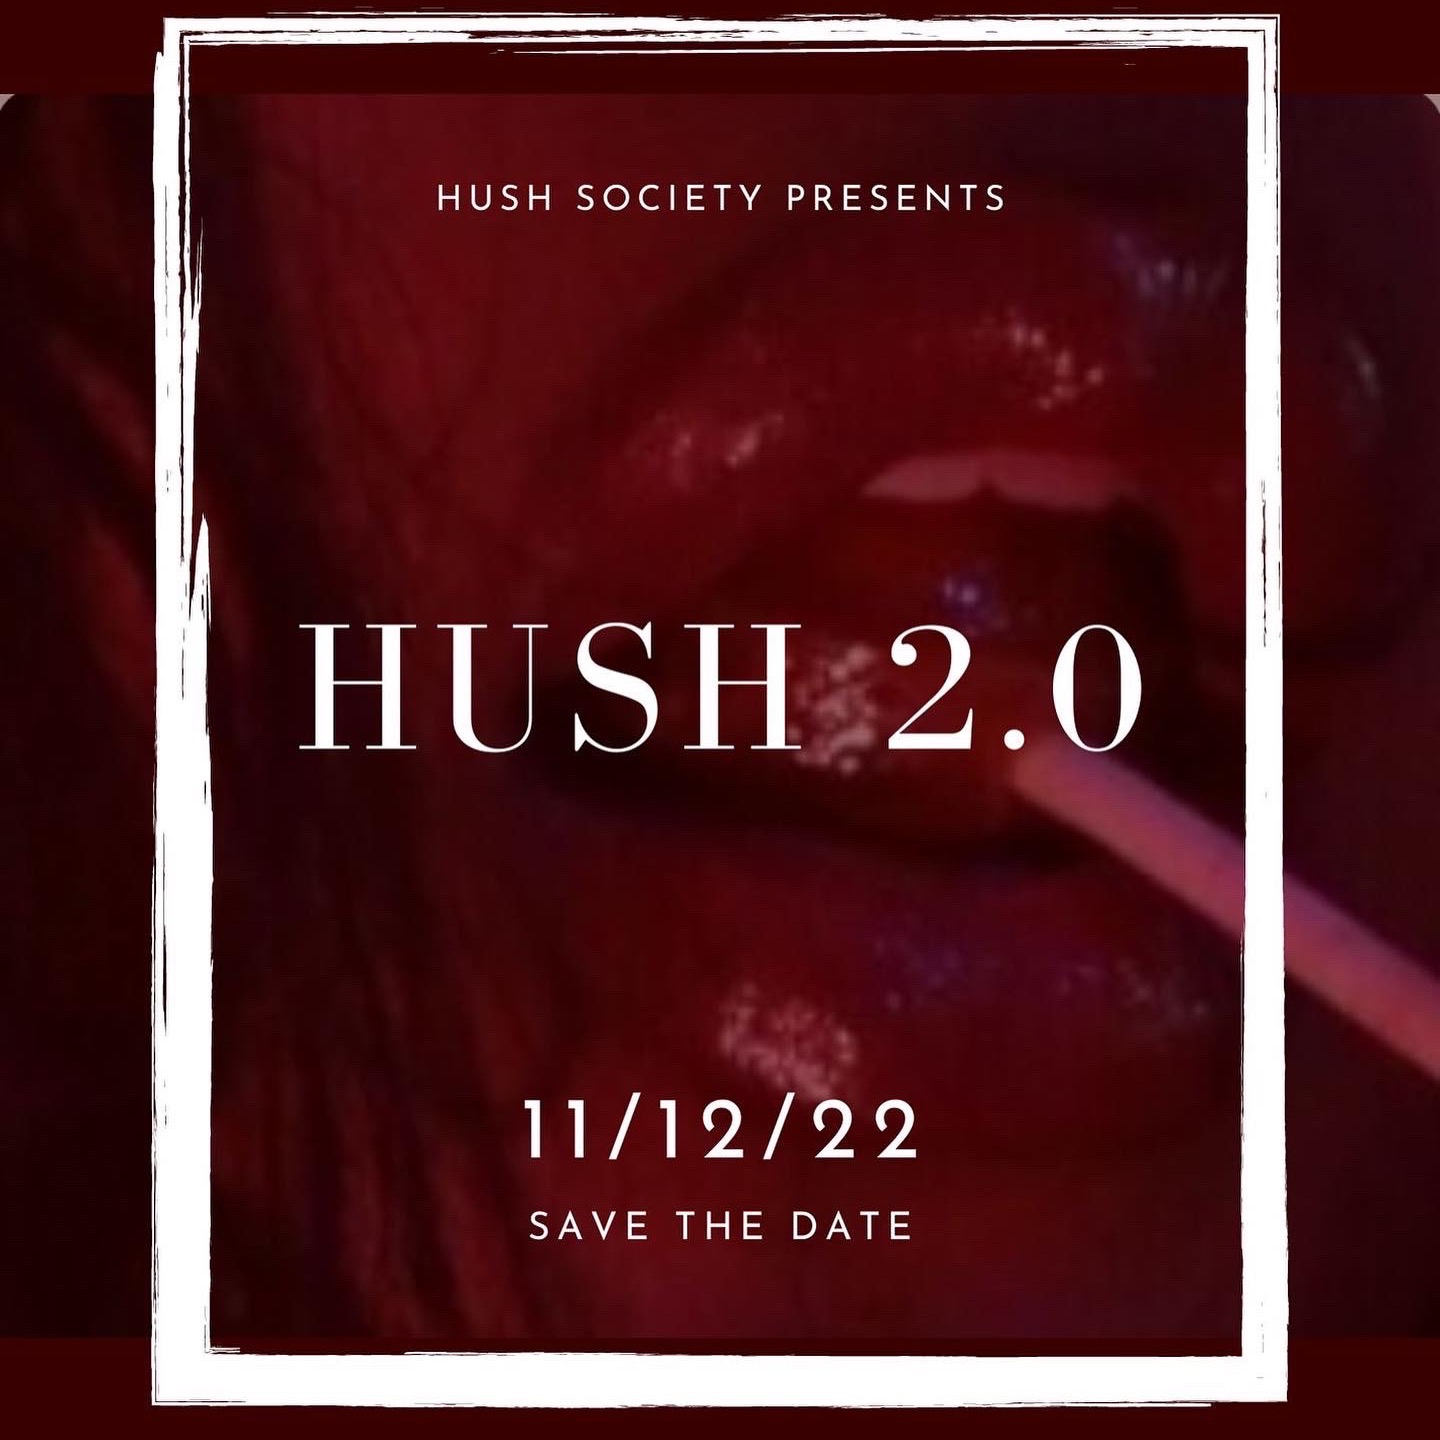 HUSH 2.0